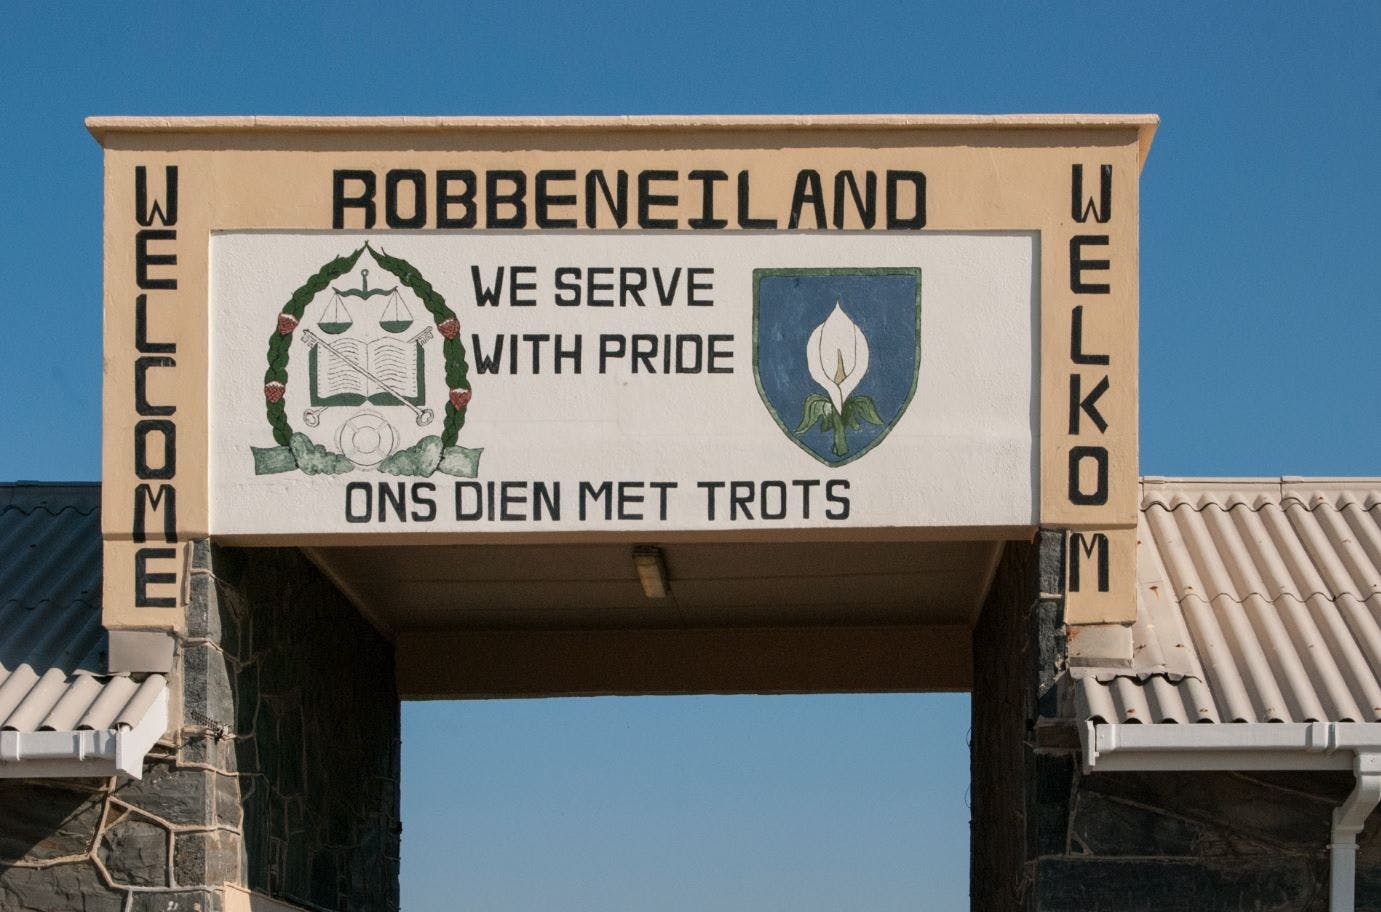 Extra tip: Robbeneiland